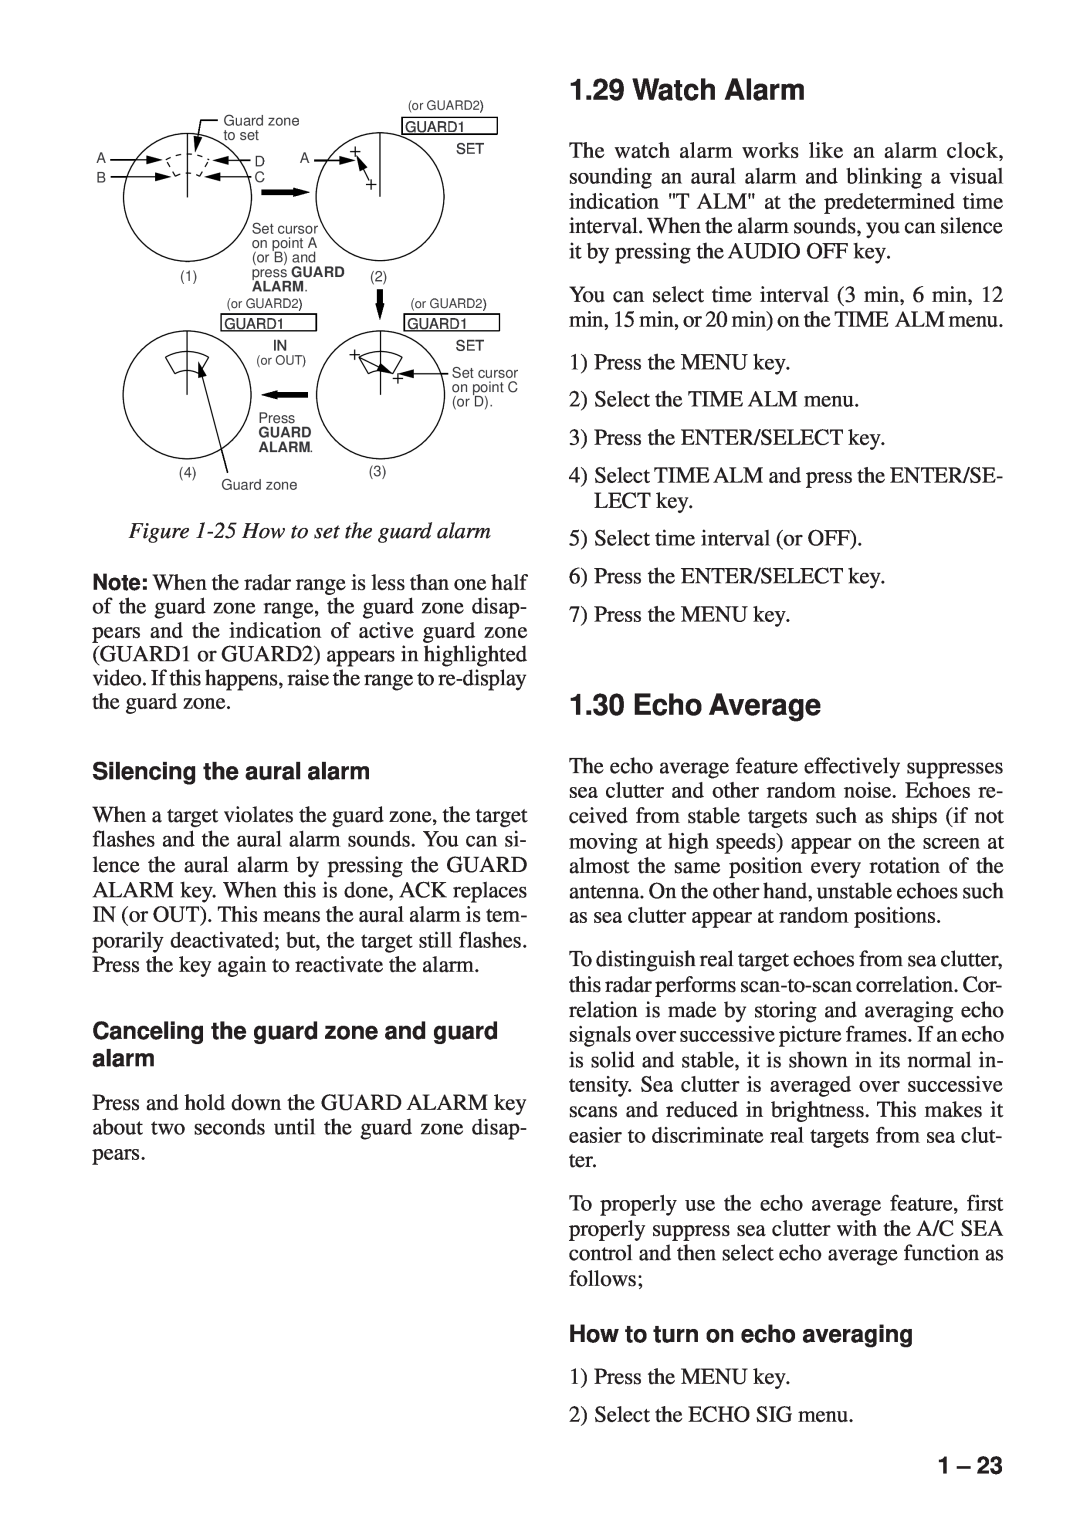 Furuno FR-8111, FR-8251 manual Watch Alarm, Echo Average, 25 How to set the guard alarm, Silencing the aural alarm 